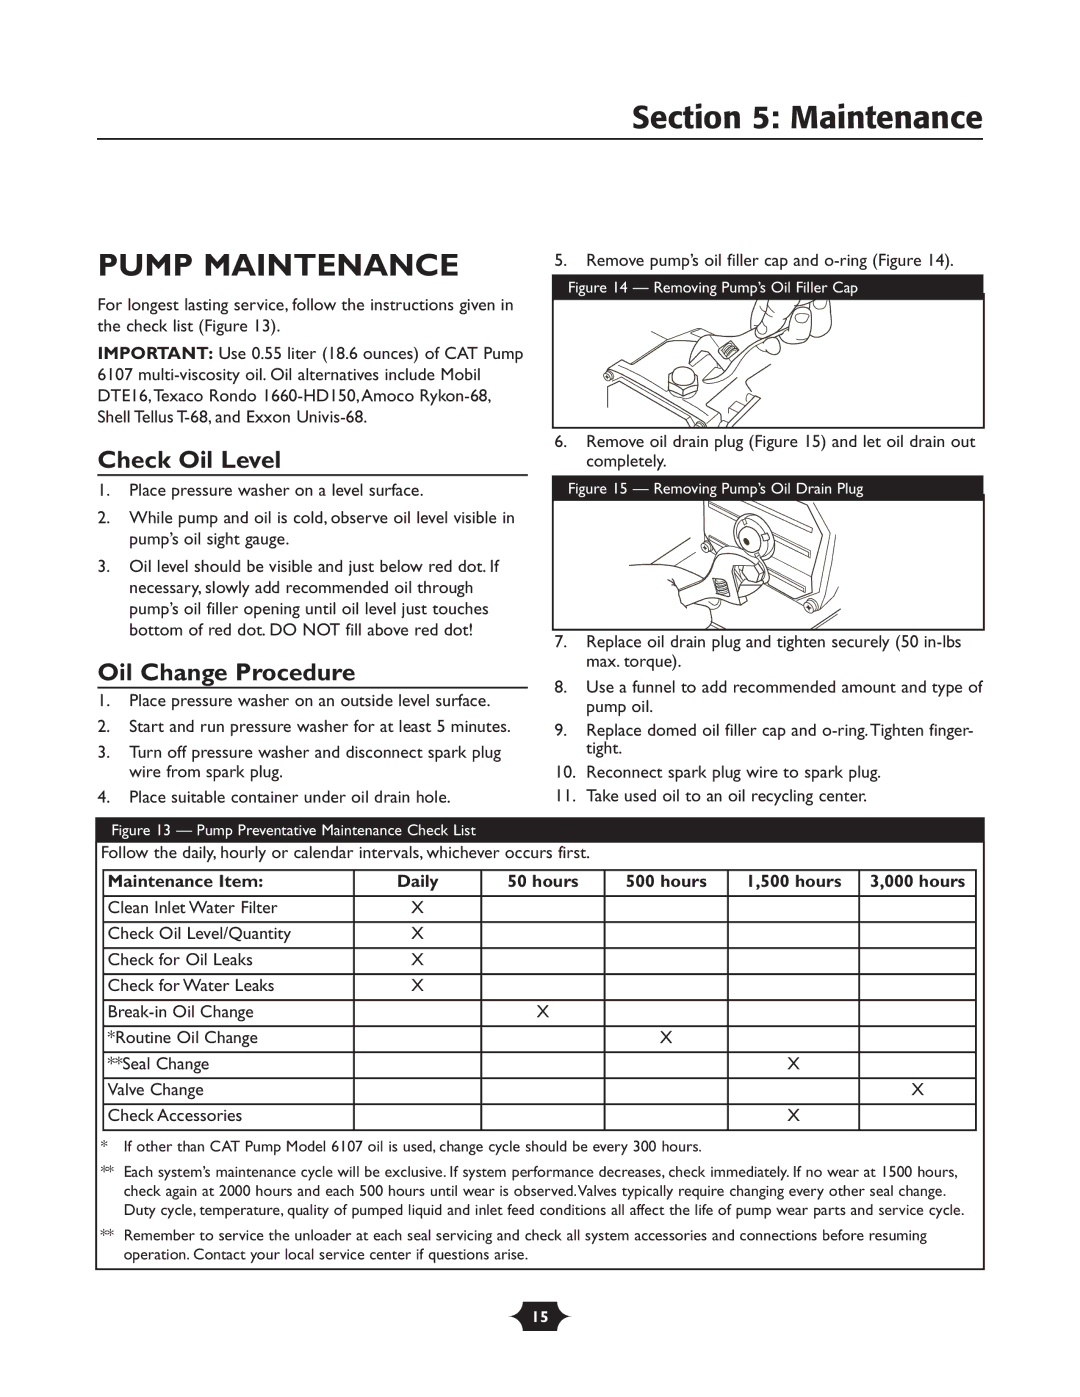 Briggs & Stratton 20258 manual Pump Maintenance, Check Oil Level, Oil Change Procedure, Maintenance Item Daily Hours 